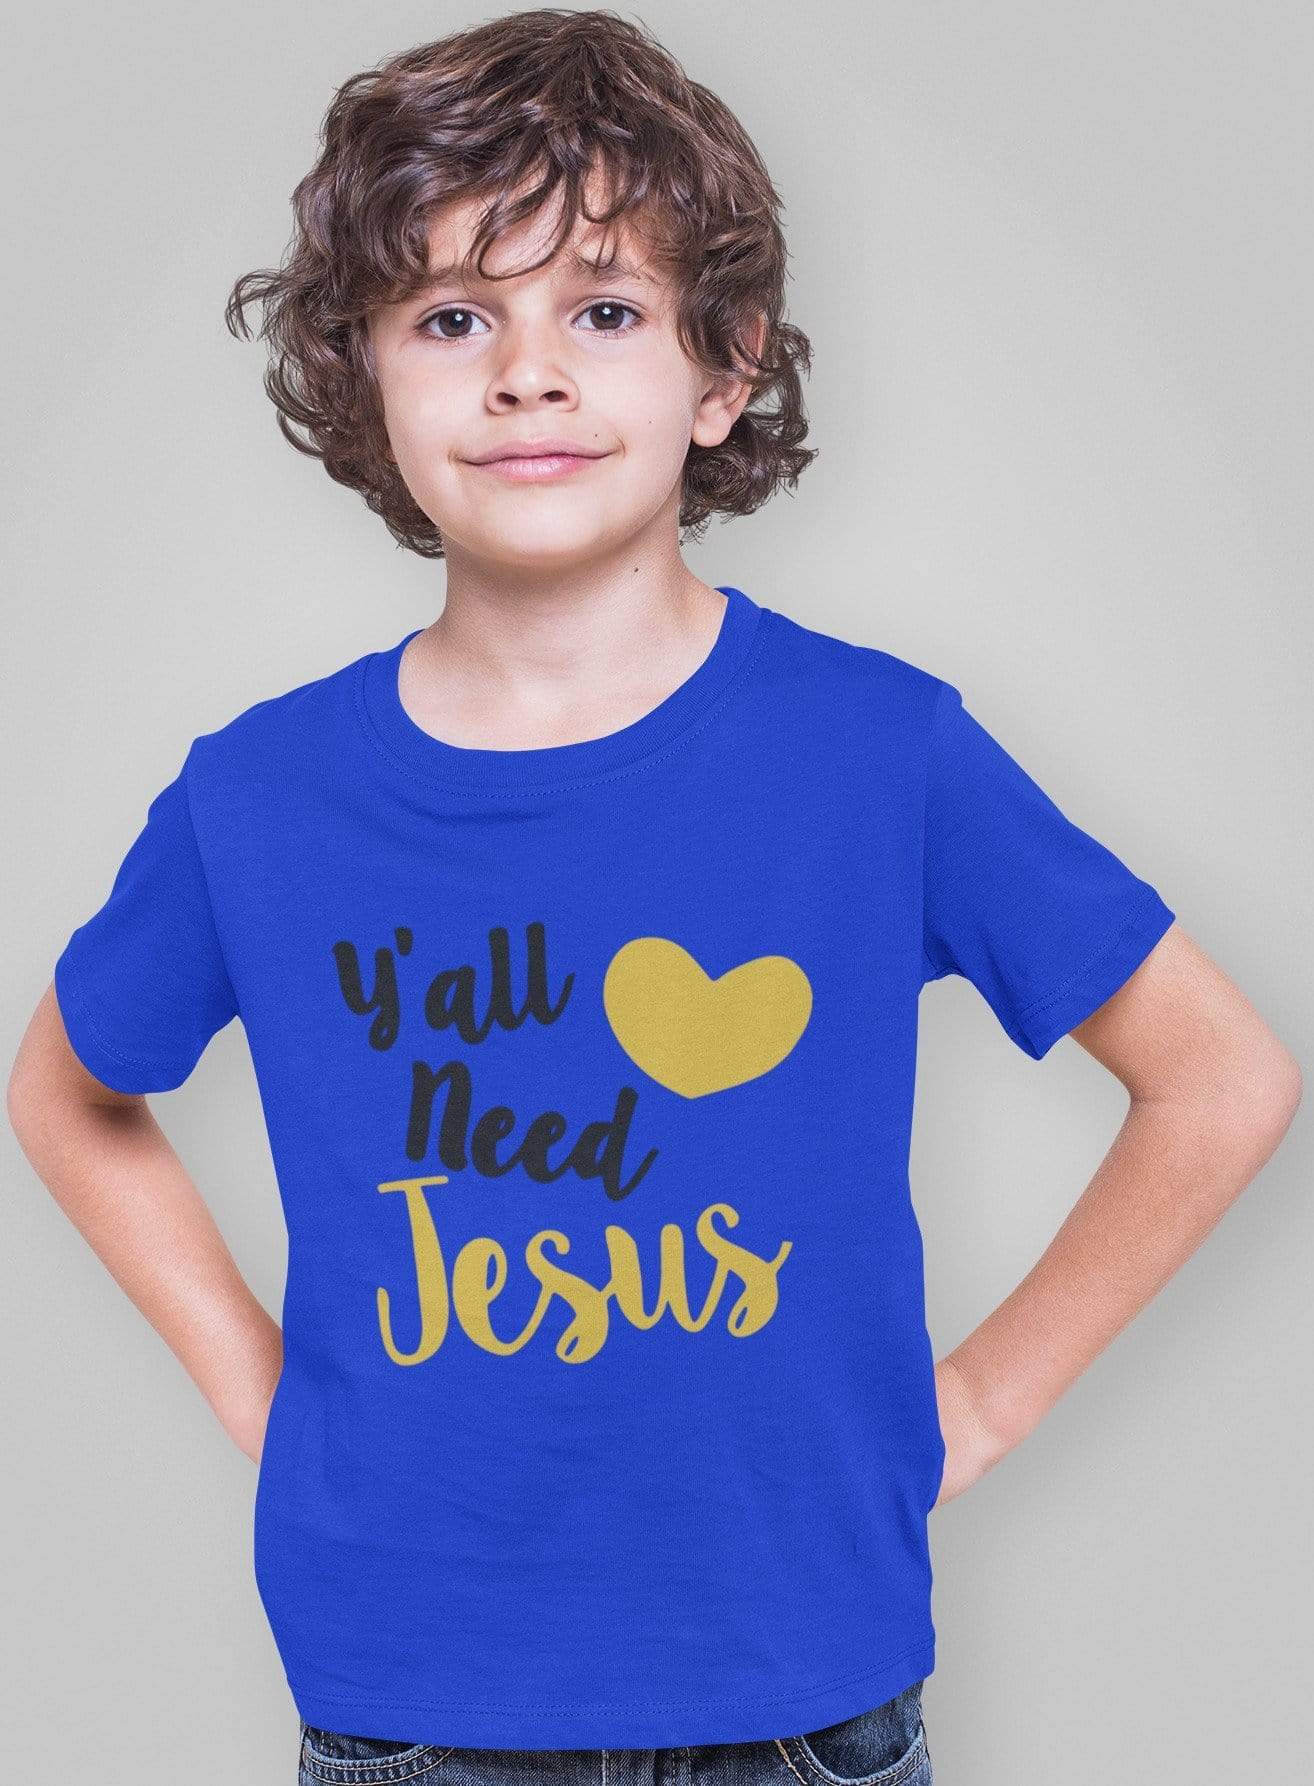 Living Words Boy Round neck Tshirt 0-11M / Royal Blue Y'all need Jesus